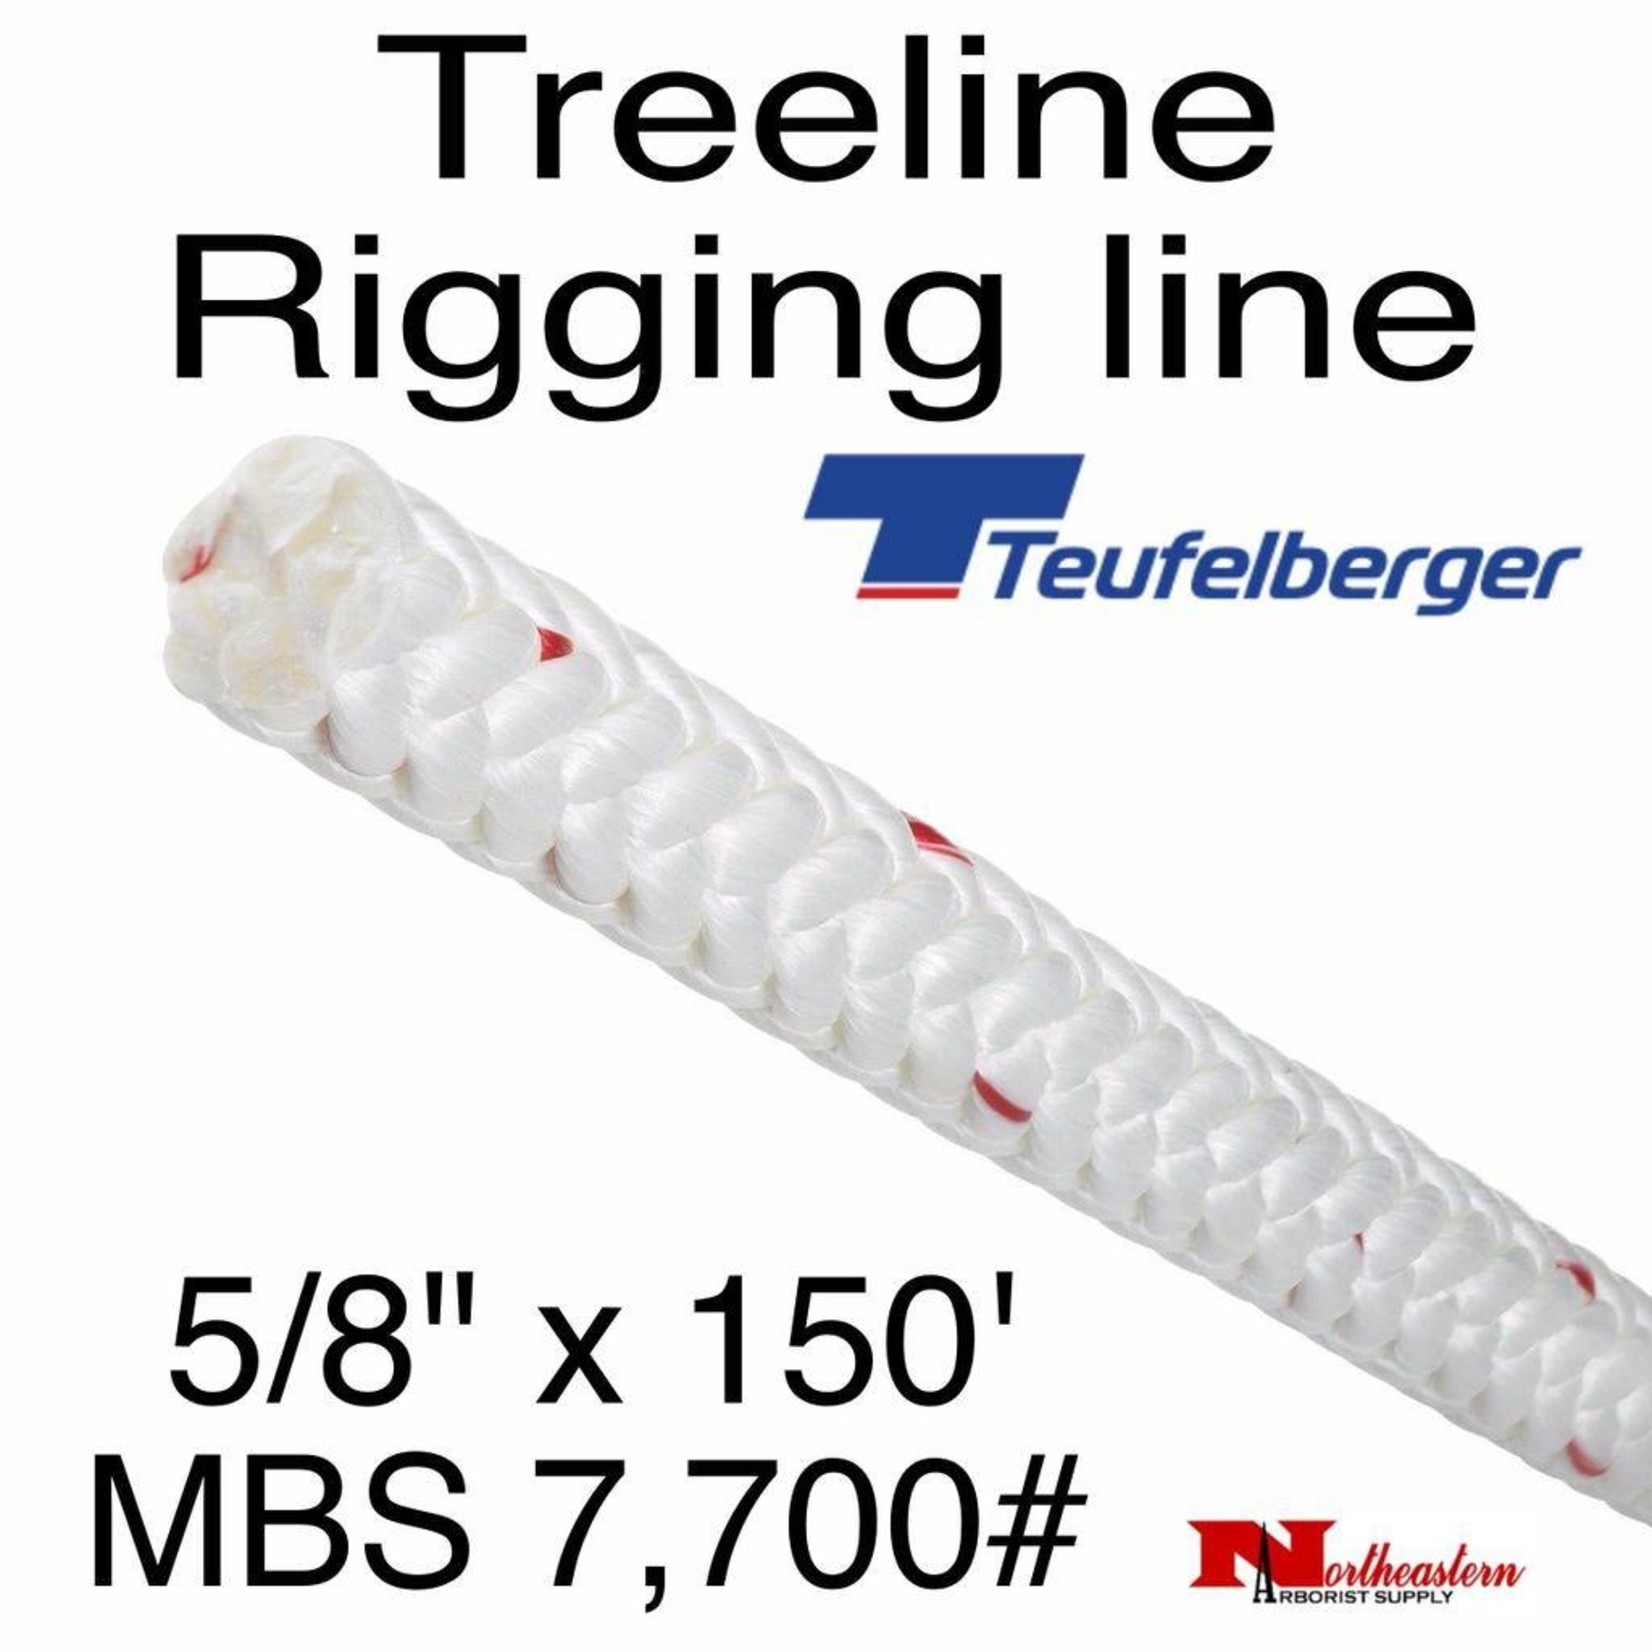 Teufelberger Treeline Bull Rope 5/8" x 150' 7,700#Mbs